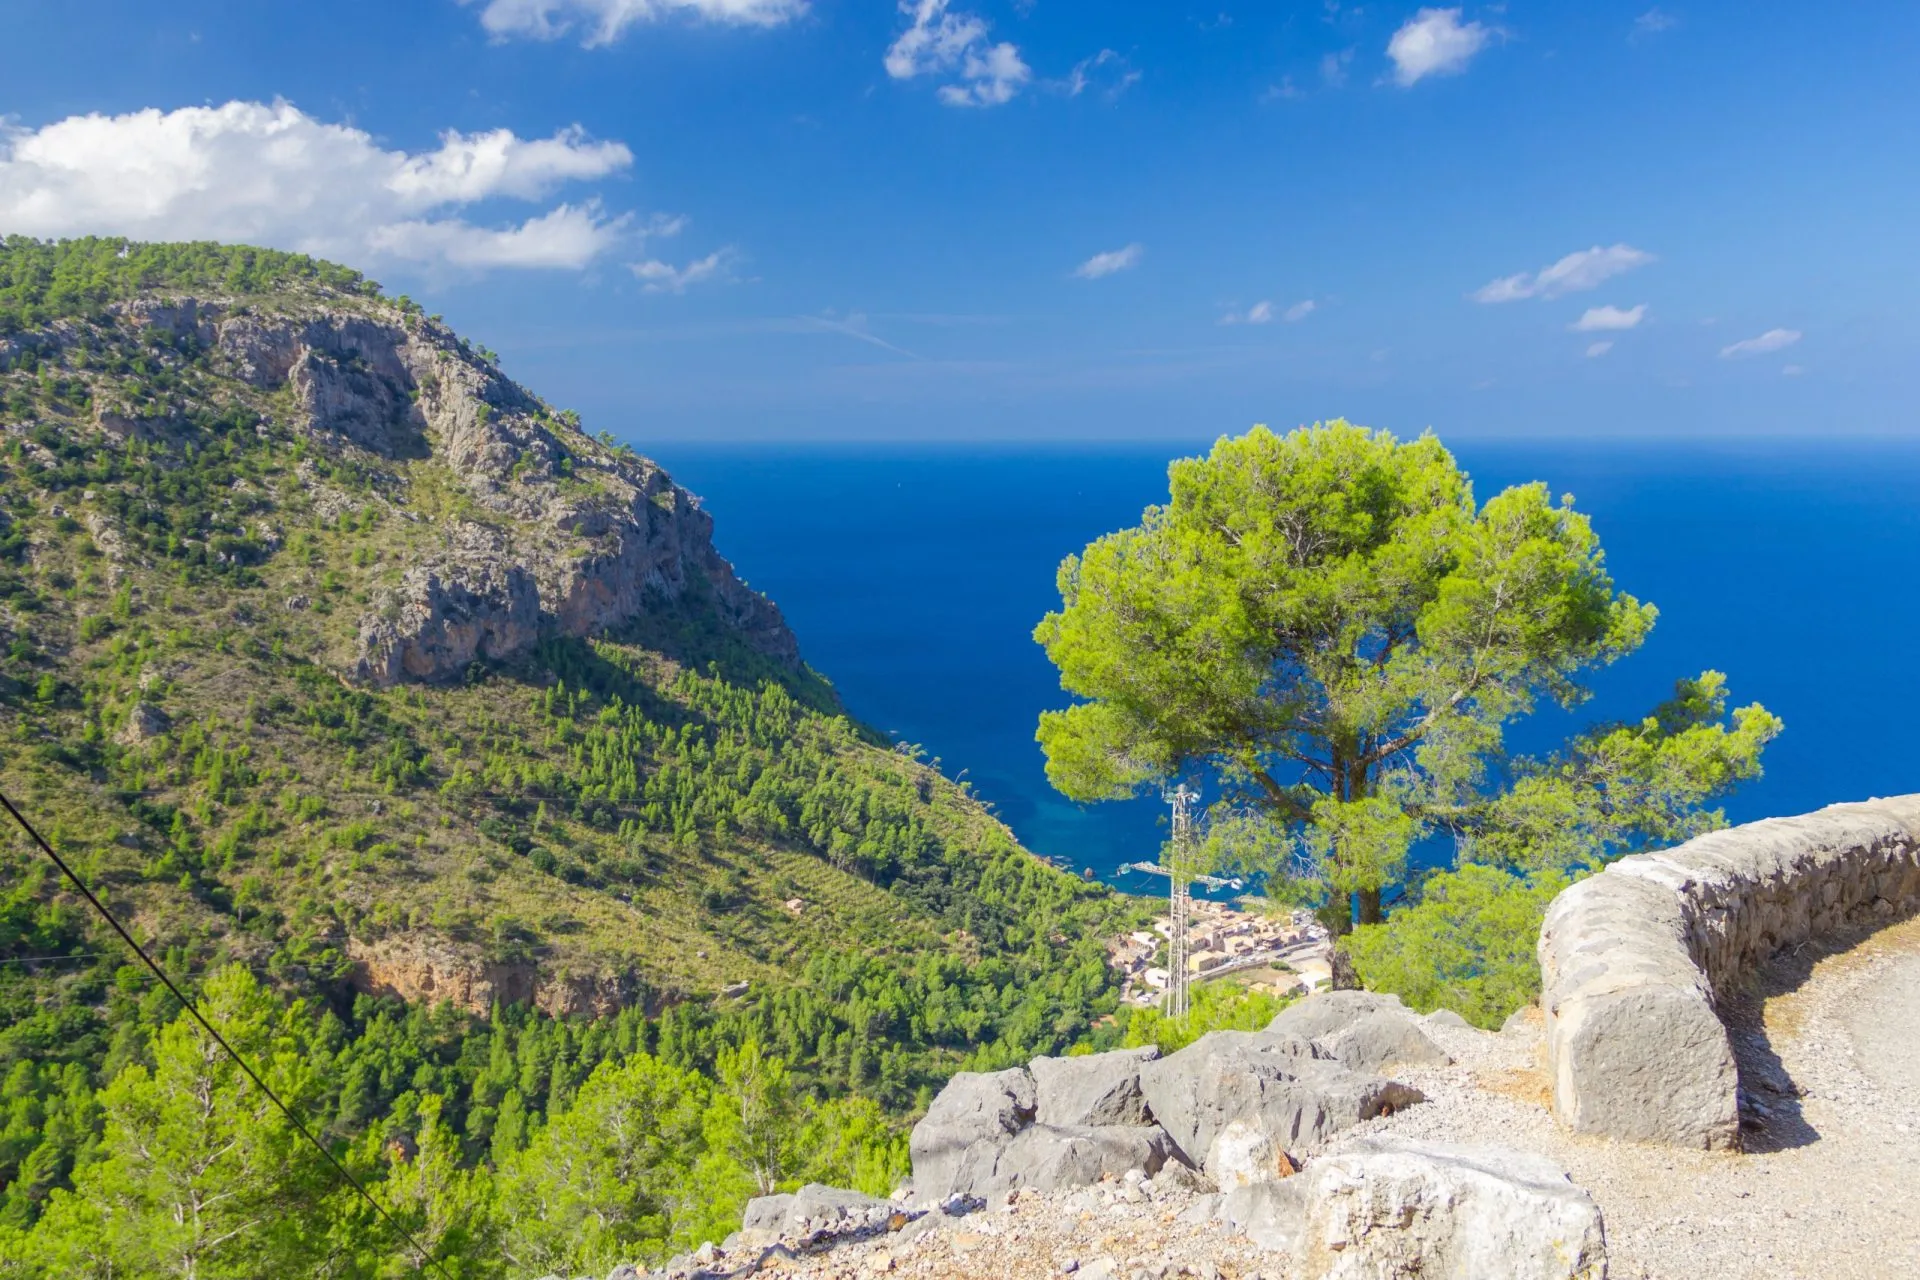 Beautiful view of Sierra de Tramuntana, Mallorca, Spain